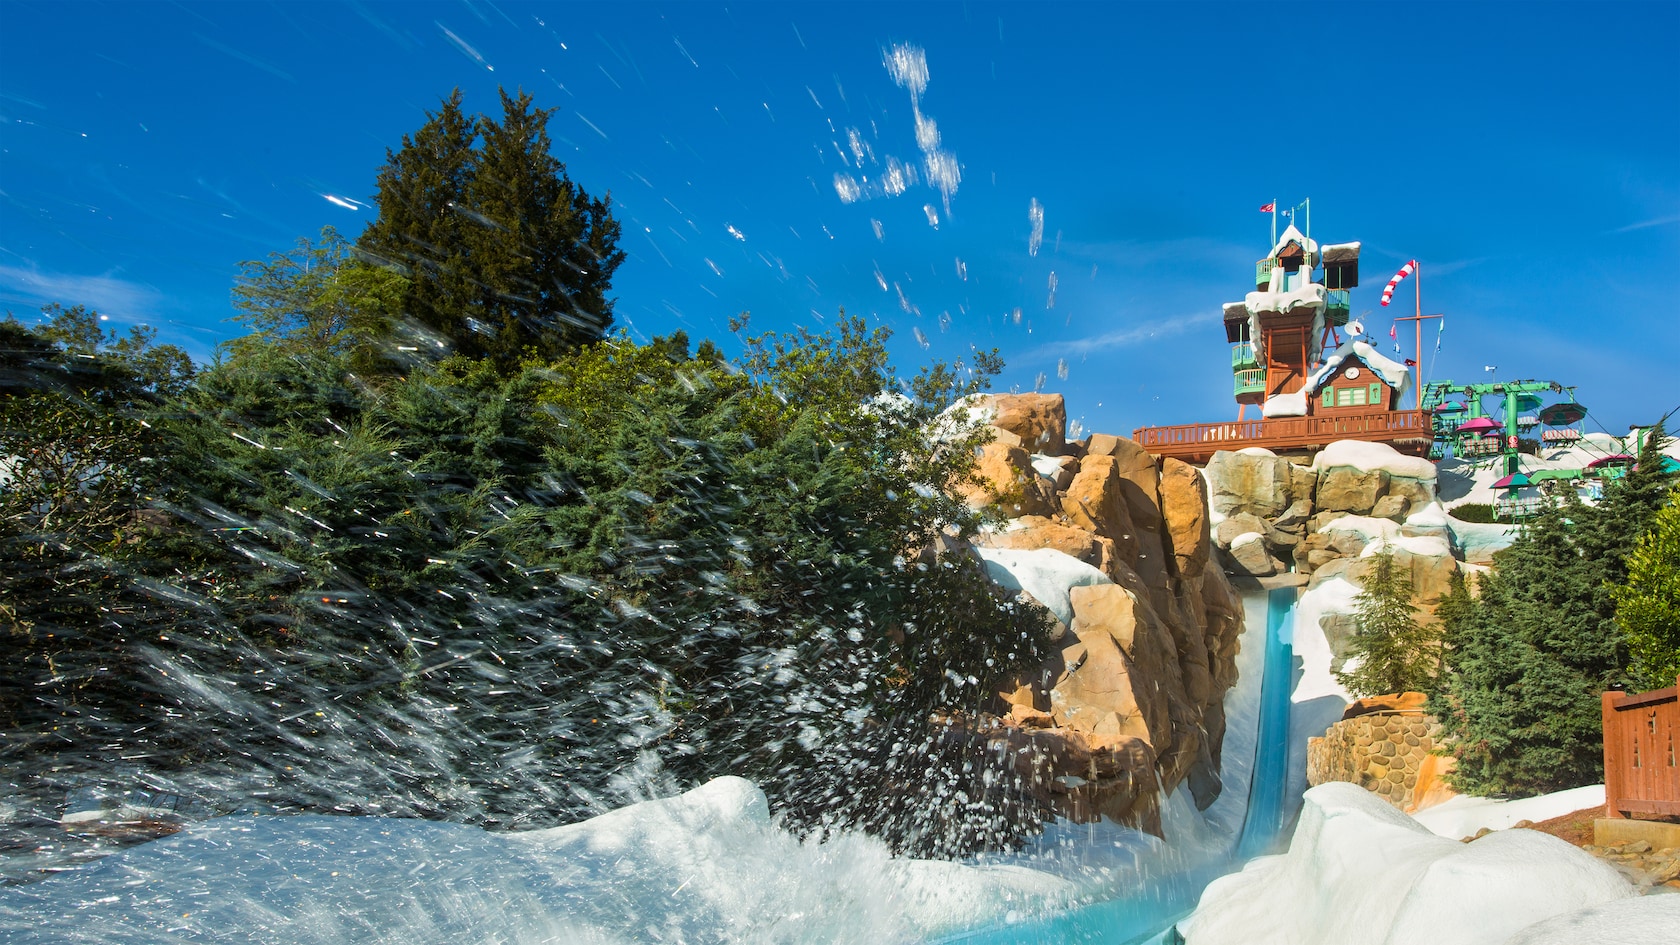 Summit Plummet, attraction
located at Disney's Blizzard Beach Water Park